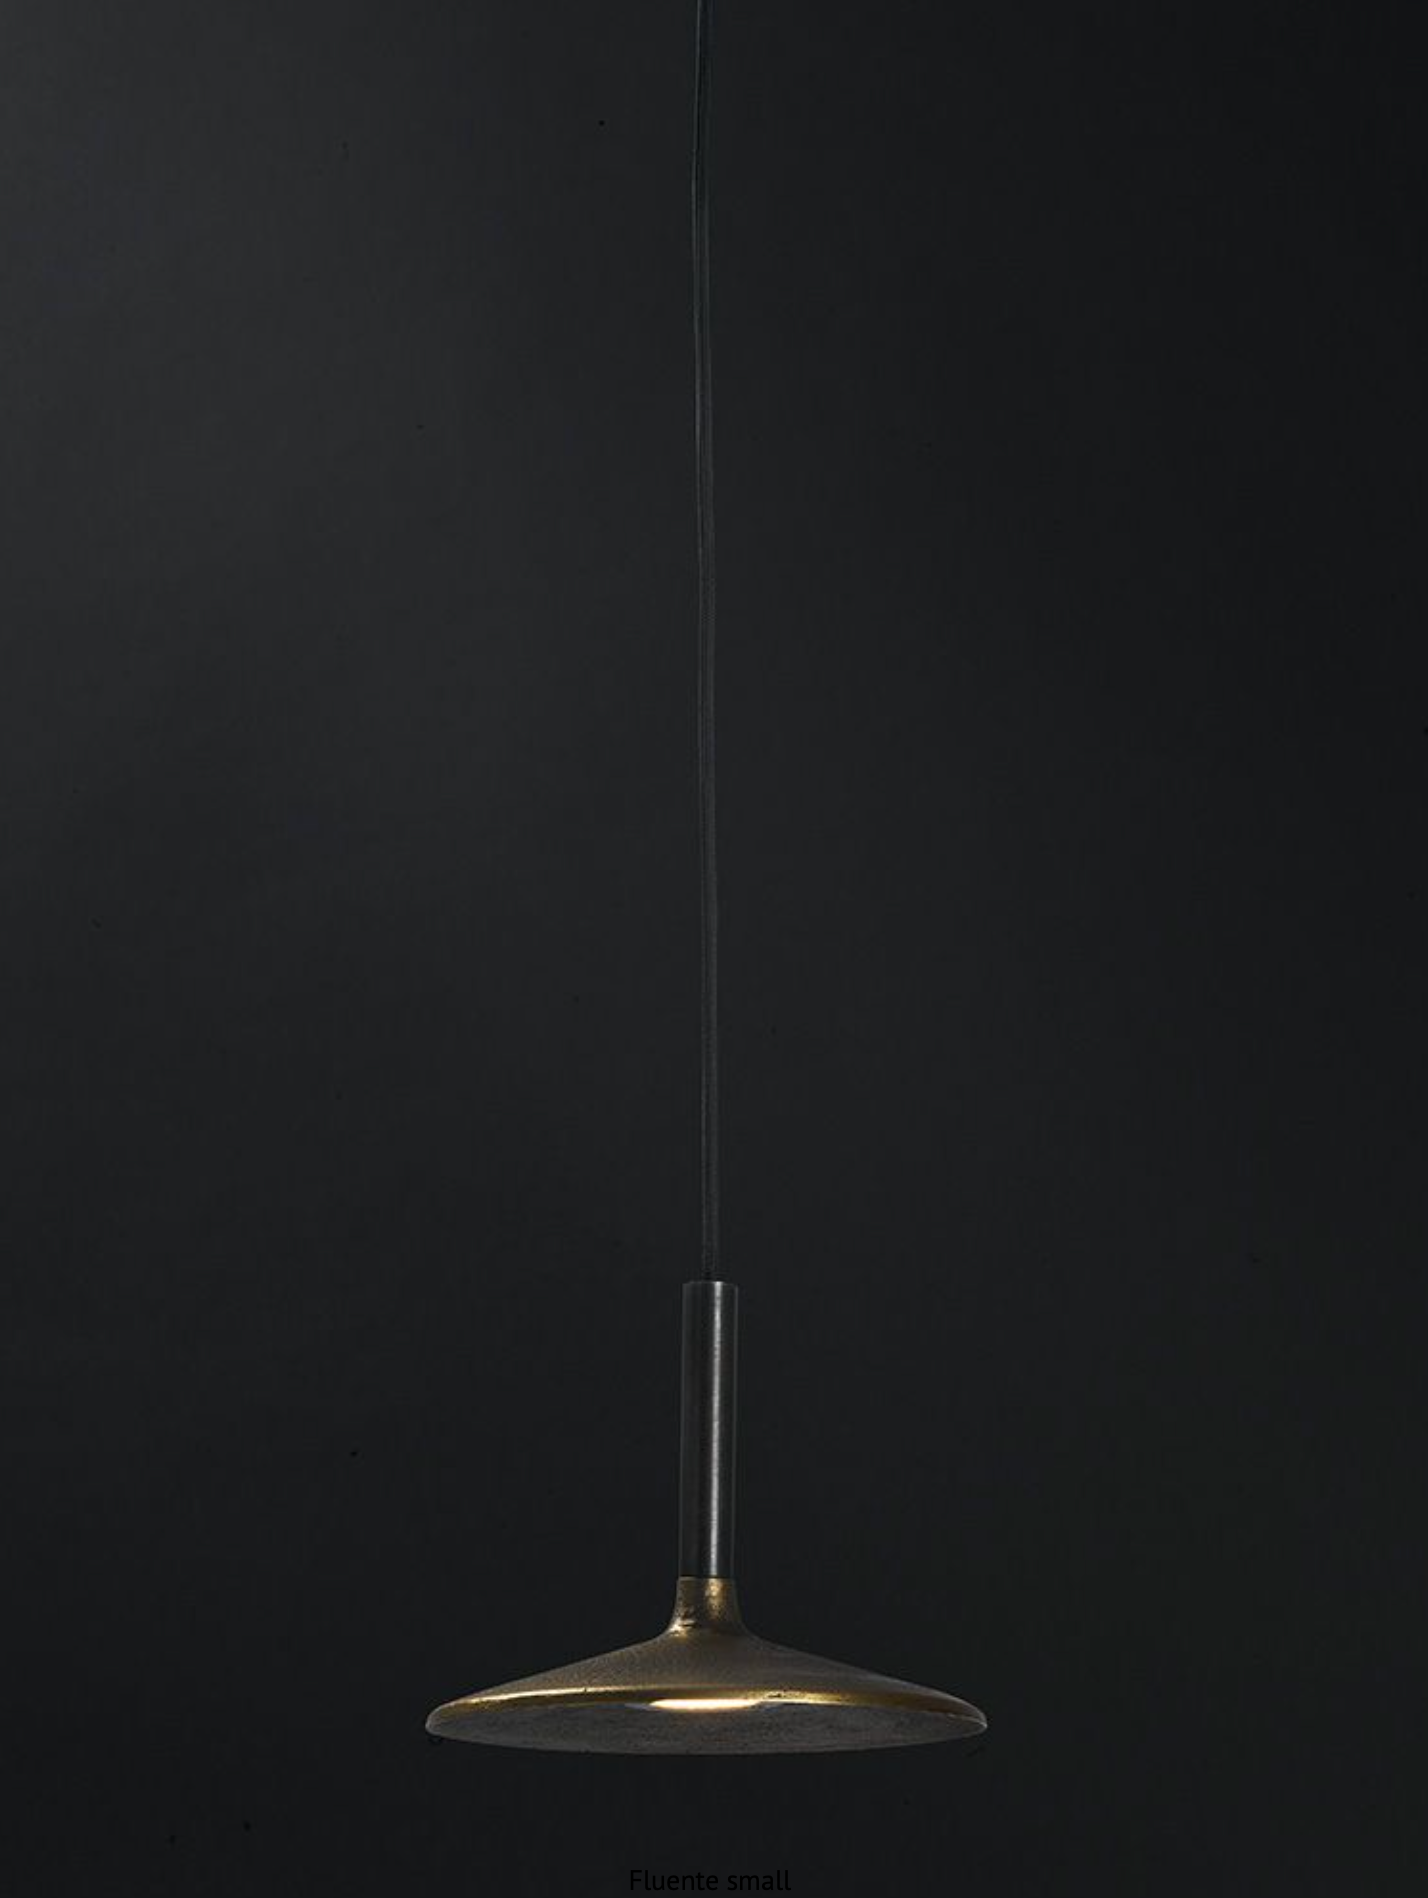 Hanging lamp Fluente Frezoli